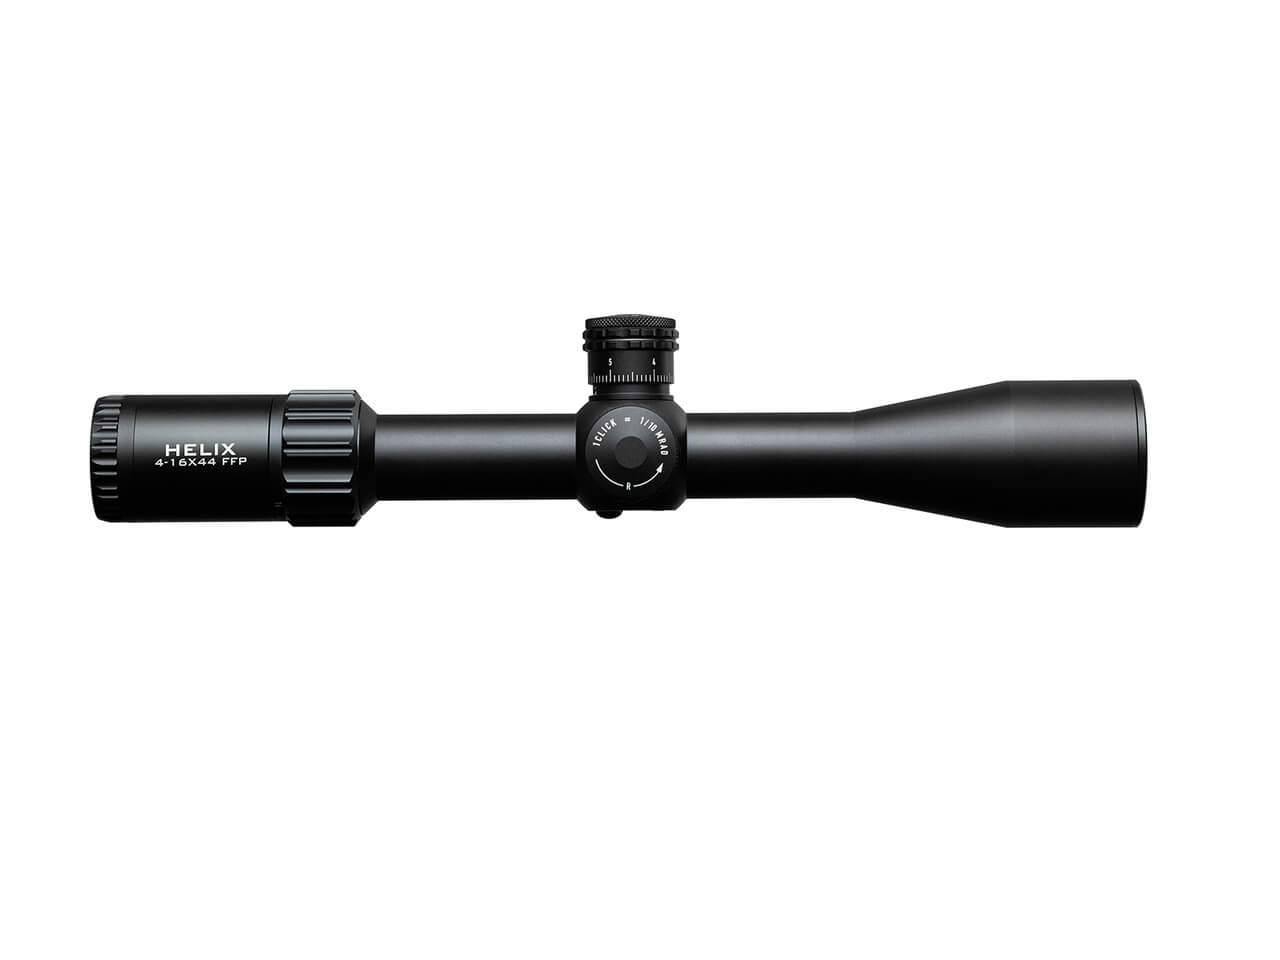 Element Helix 4-16x44 FFP Rifle Scope